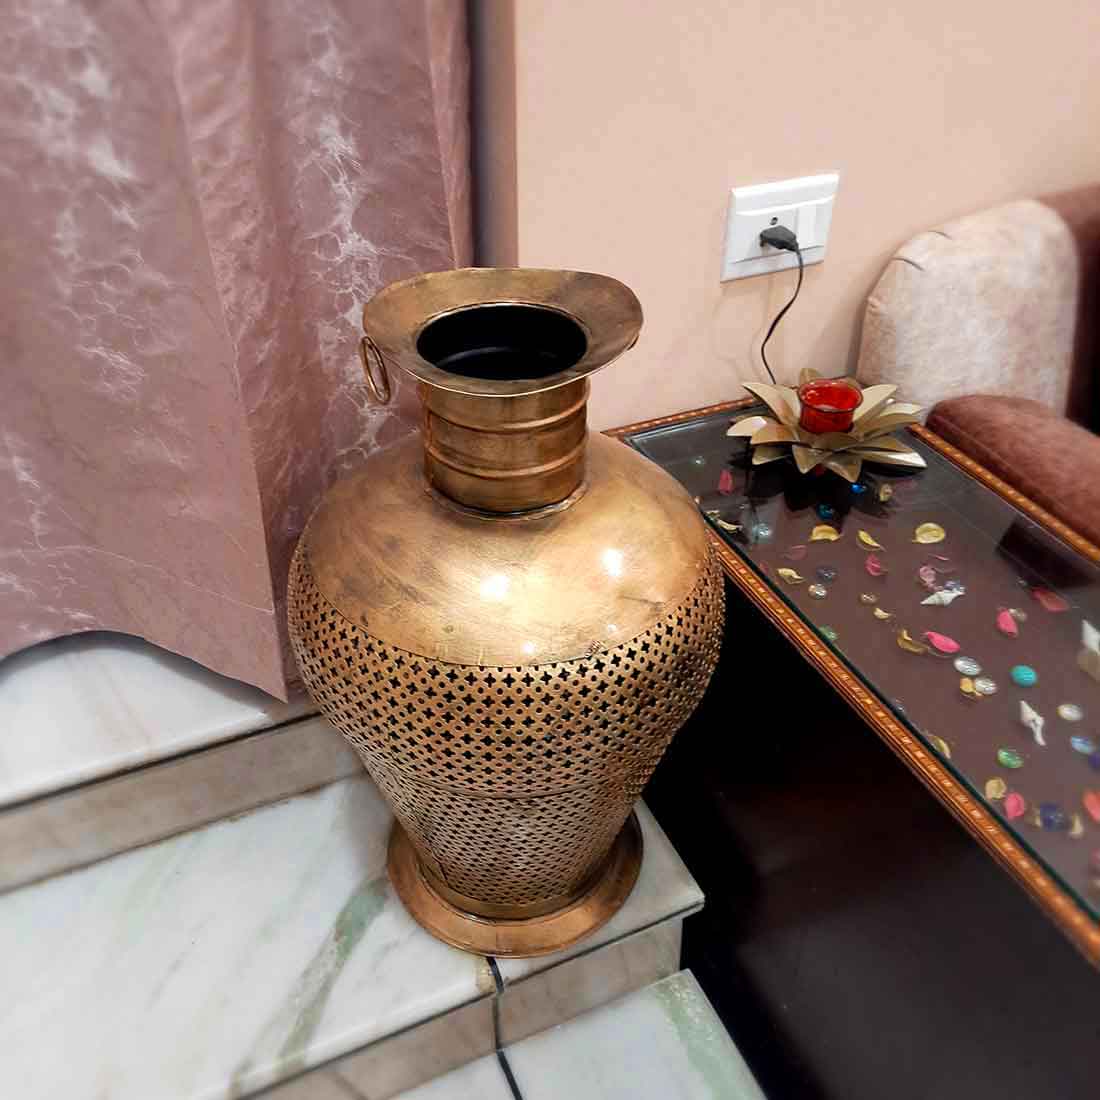 Vase with LED Lights | LED Lamp Showpiece - for Living Room & Gifts - 23 Inch